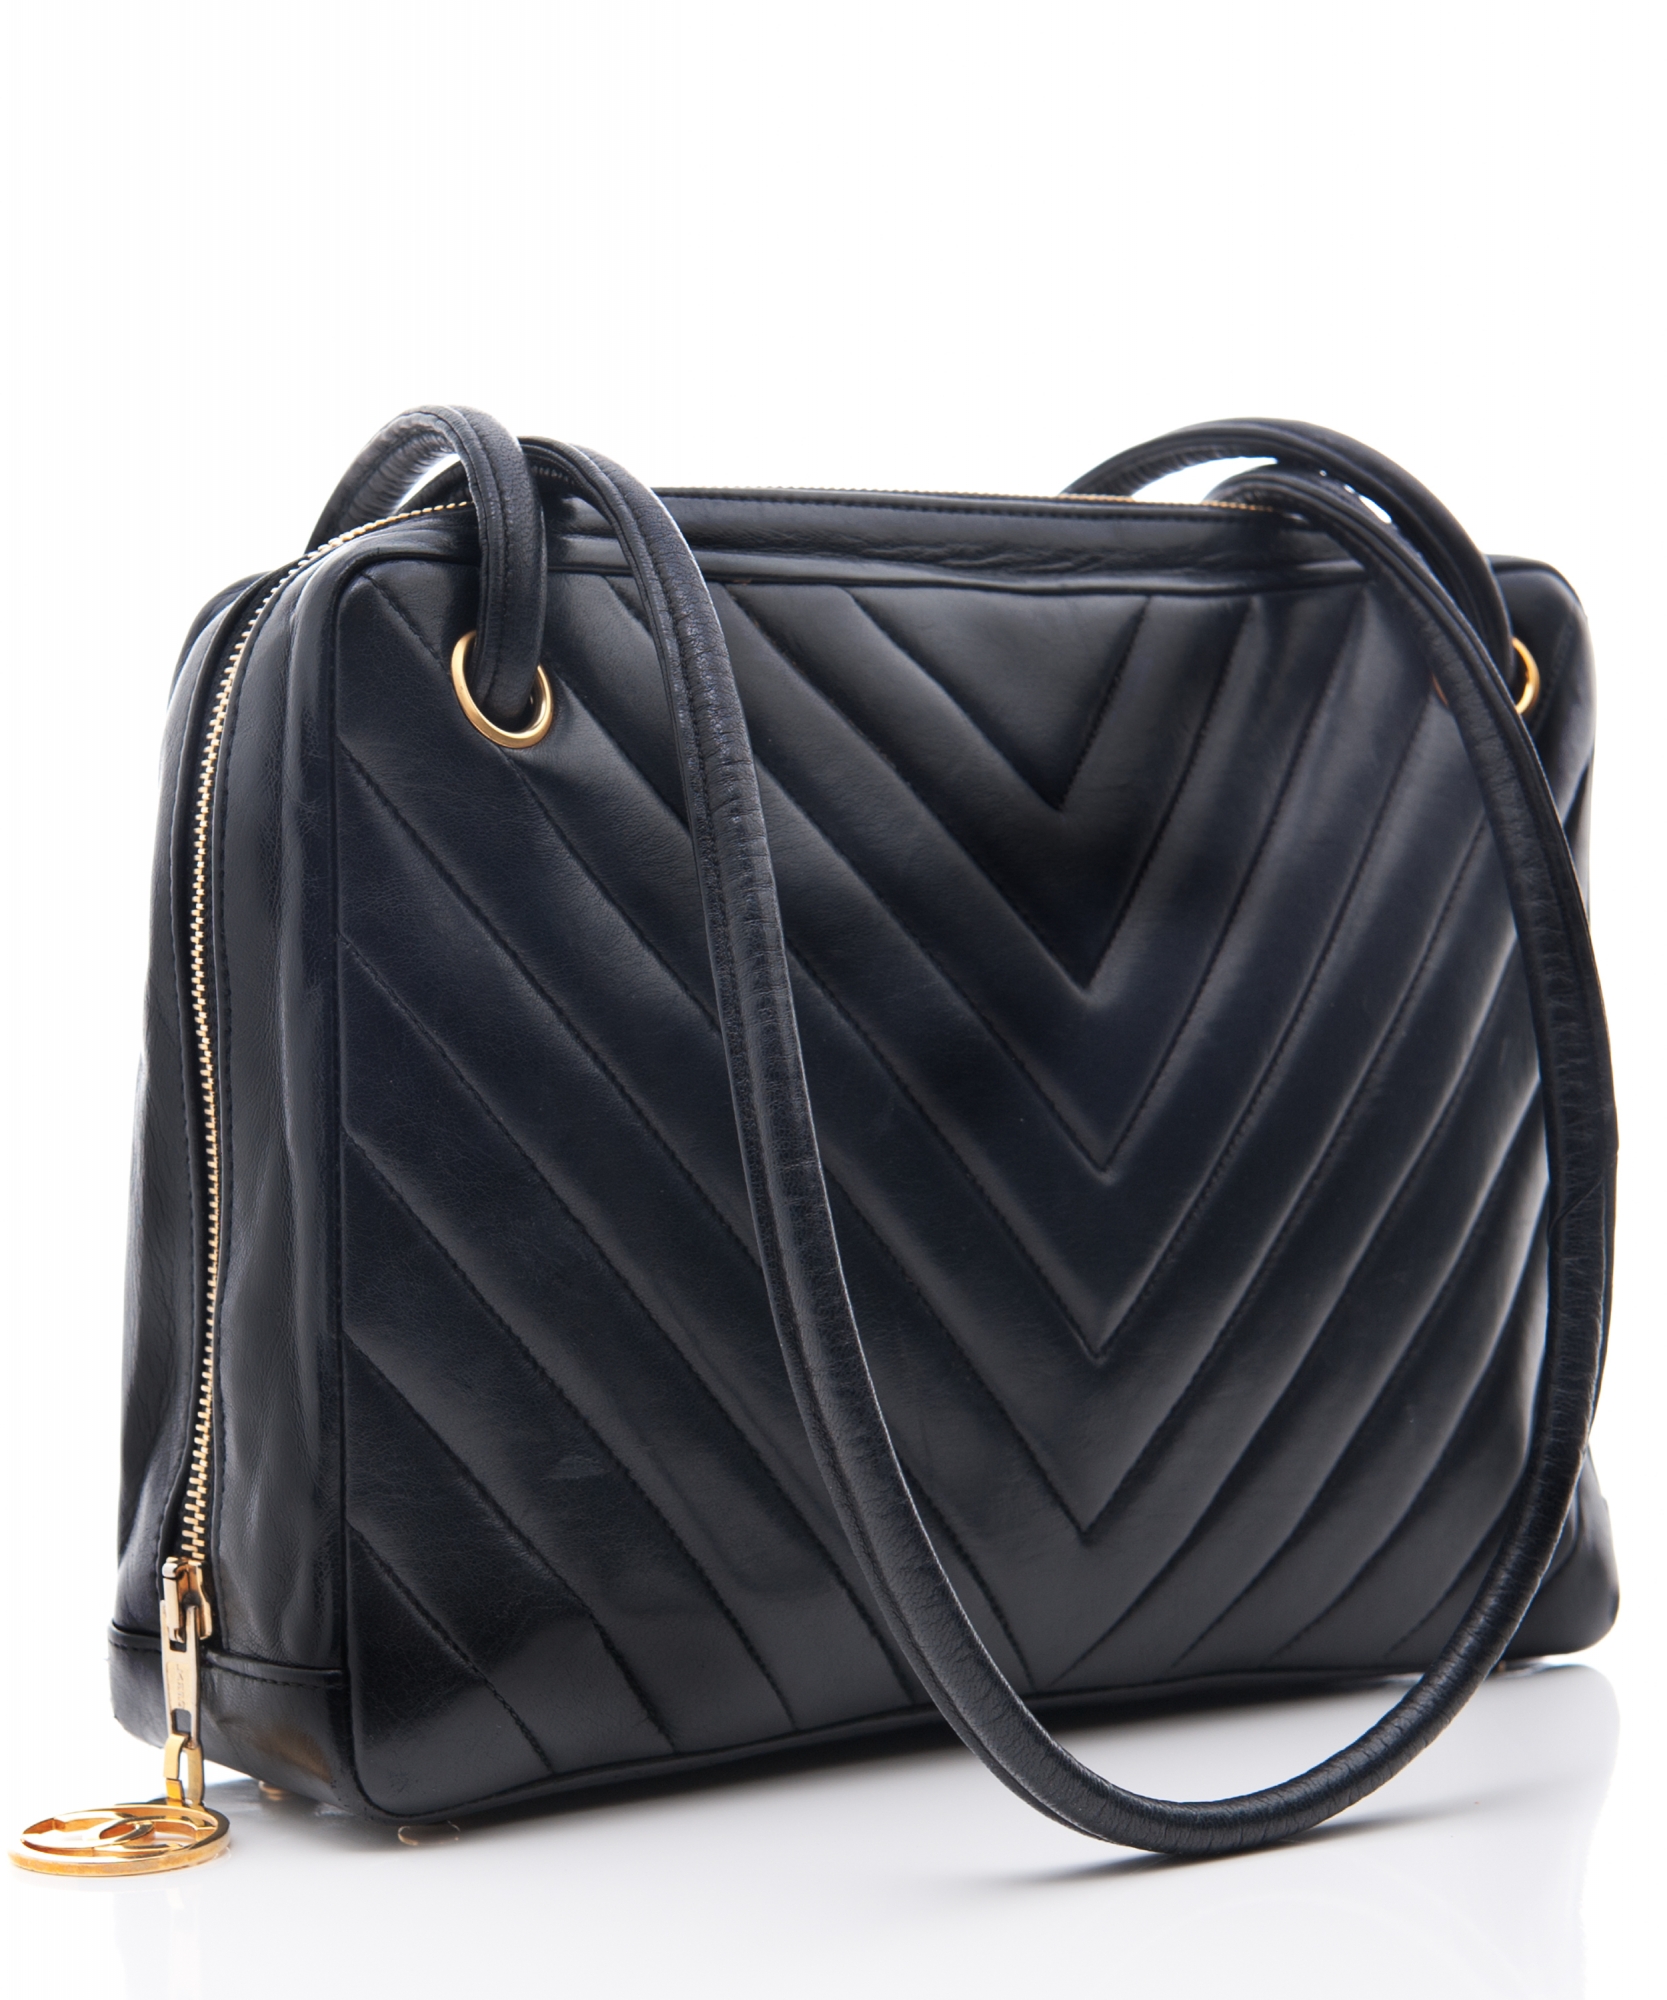 1183. Chanel Vintage Black Leather Chevron Quilted Shoulder Bag, c. 1990s -  March 2014 - ASPIRE AUCTIONS